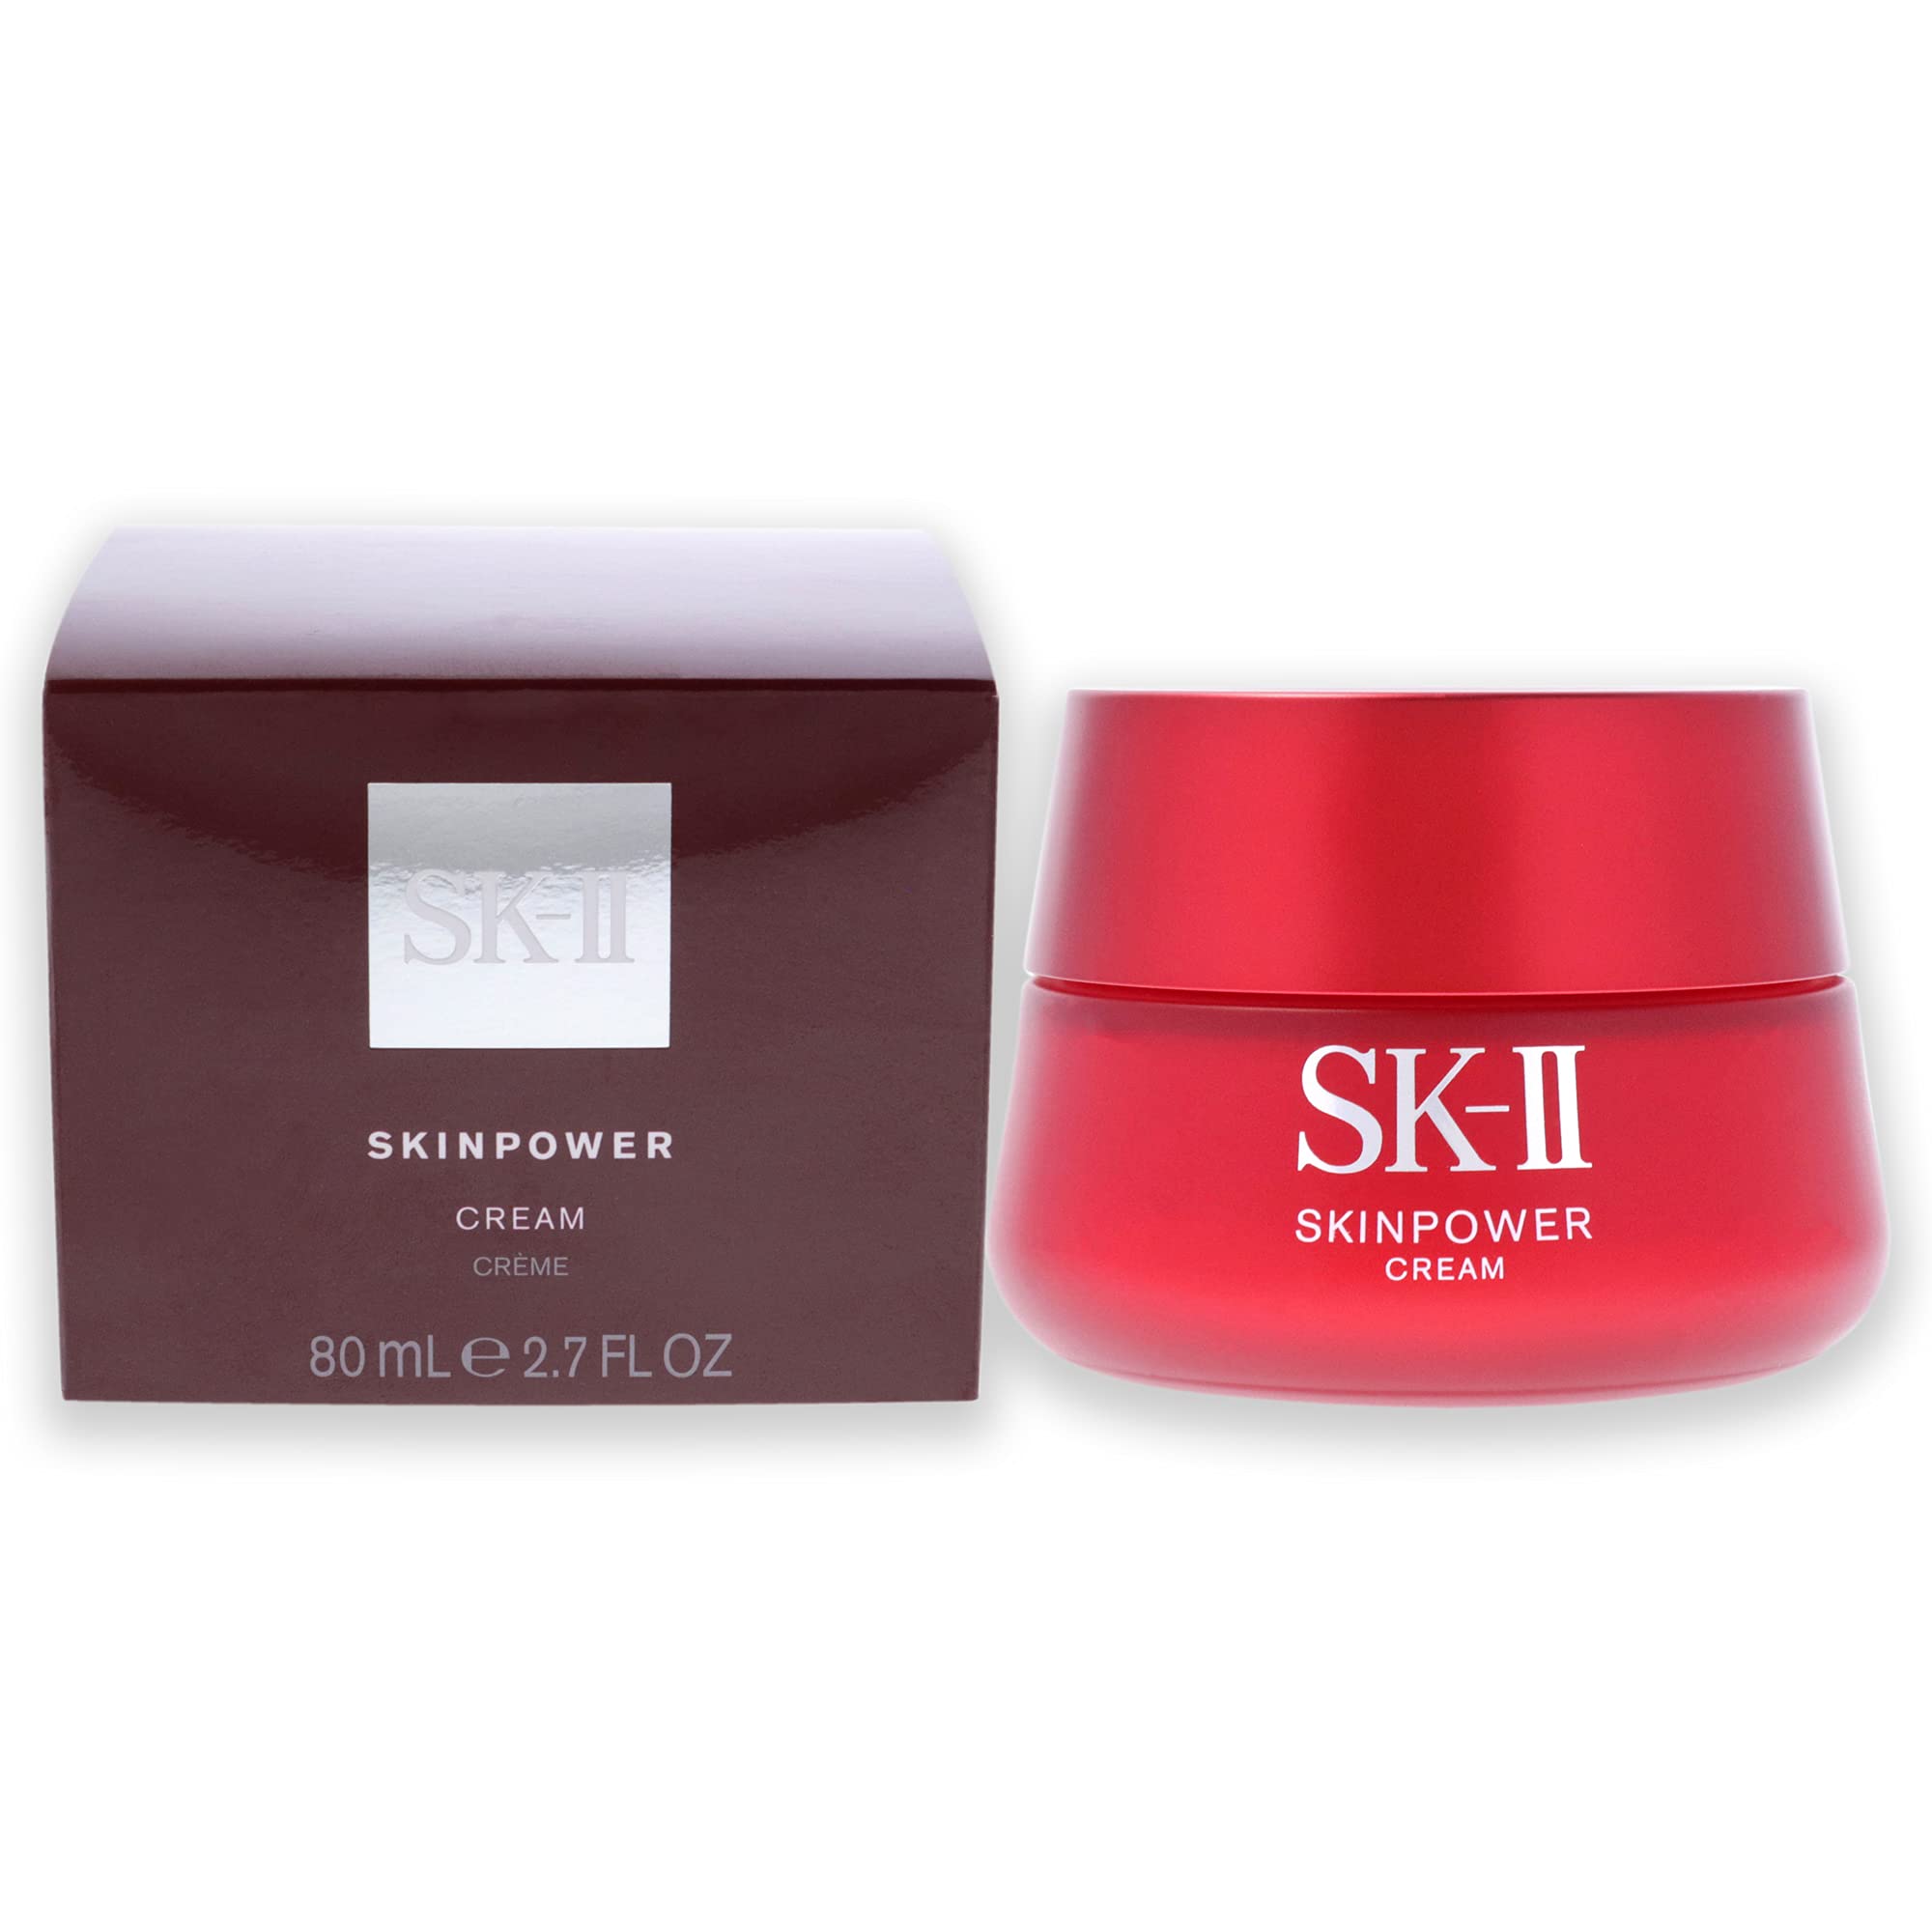 SK-II Skinpower Cream, 2.7 Ounce $182.64